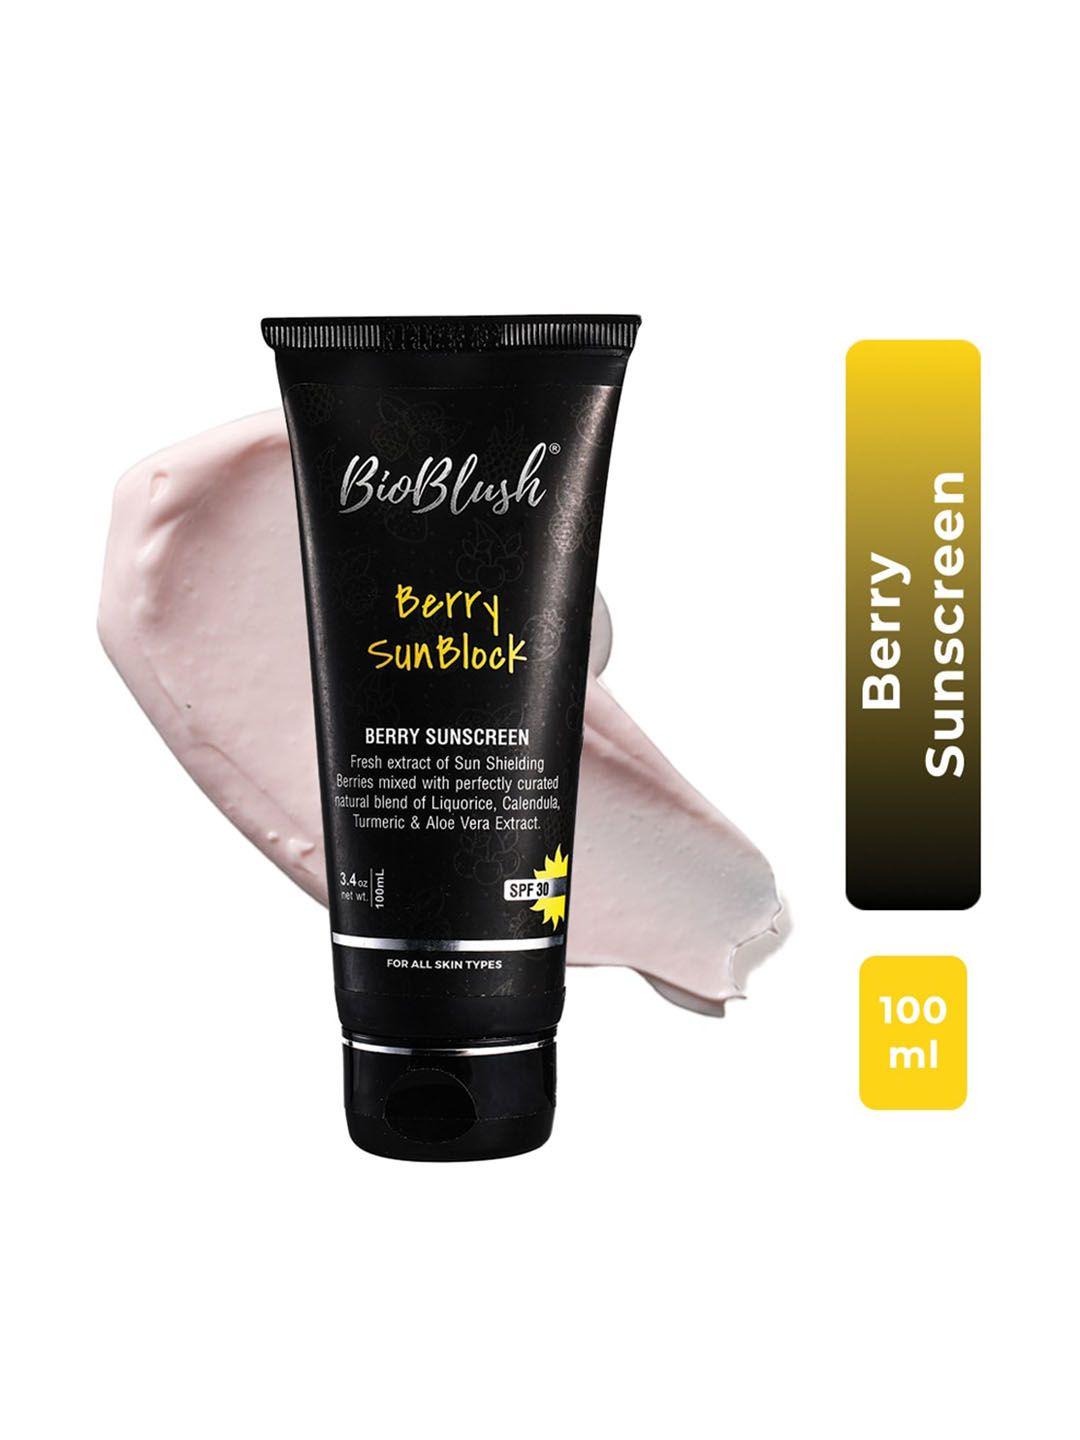 bioblush berry sunblock sunscreen with liquorice & turmeric - 100 ml